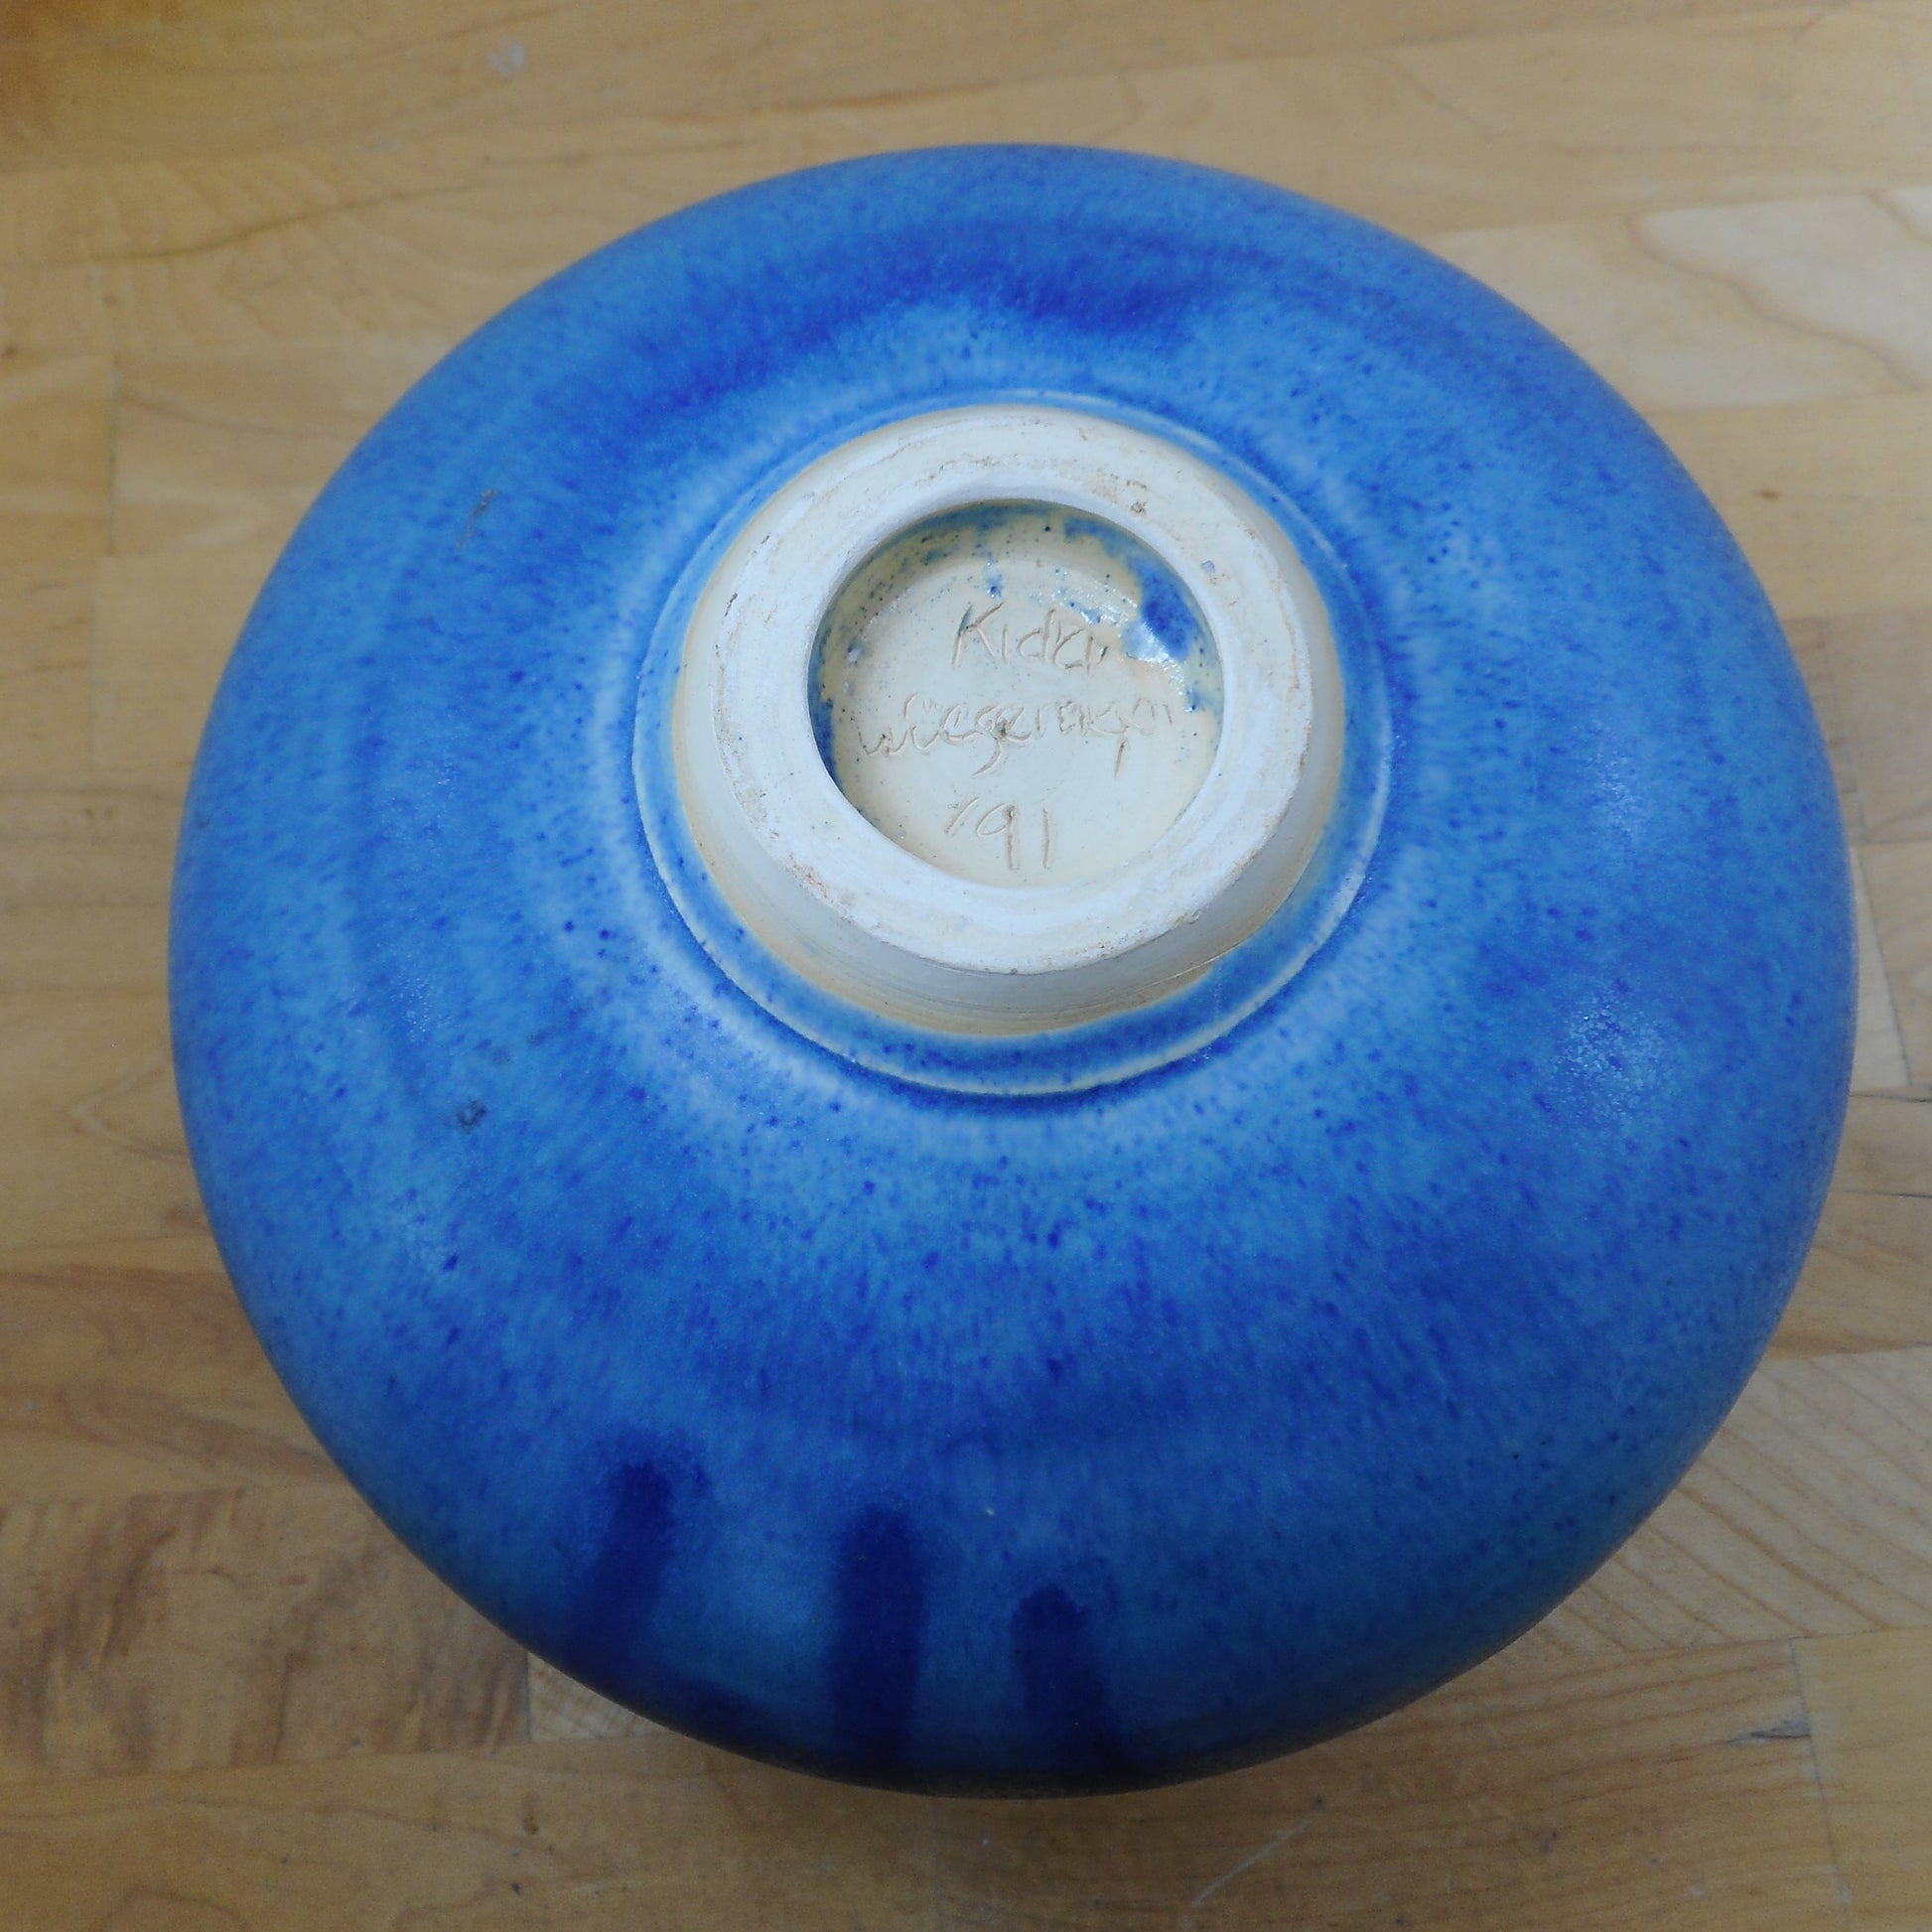 Kidd Wiesenmeyer 1991 Signed  Art Pottery Basket Vase Woven